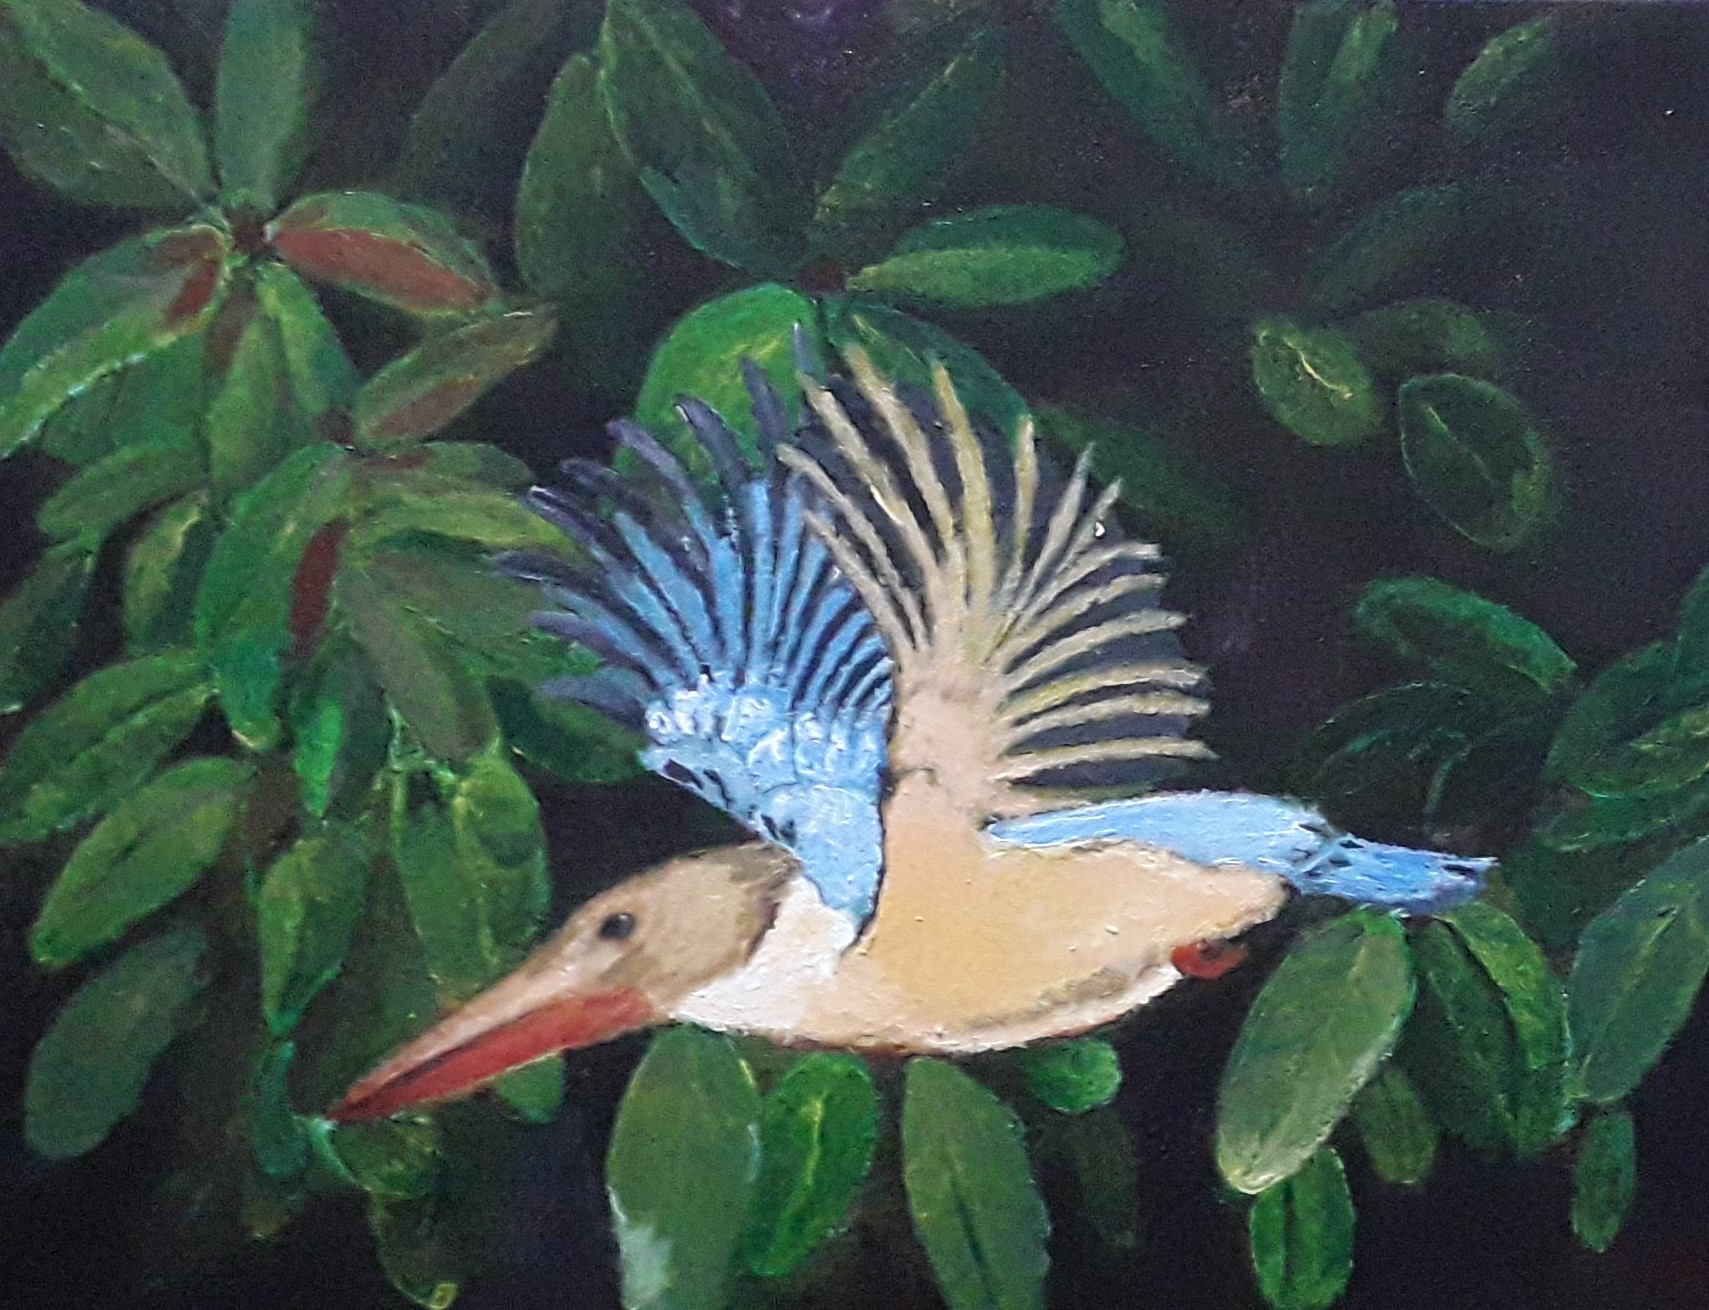 Kingfisher in Action - Sri Lanka by Simpson David